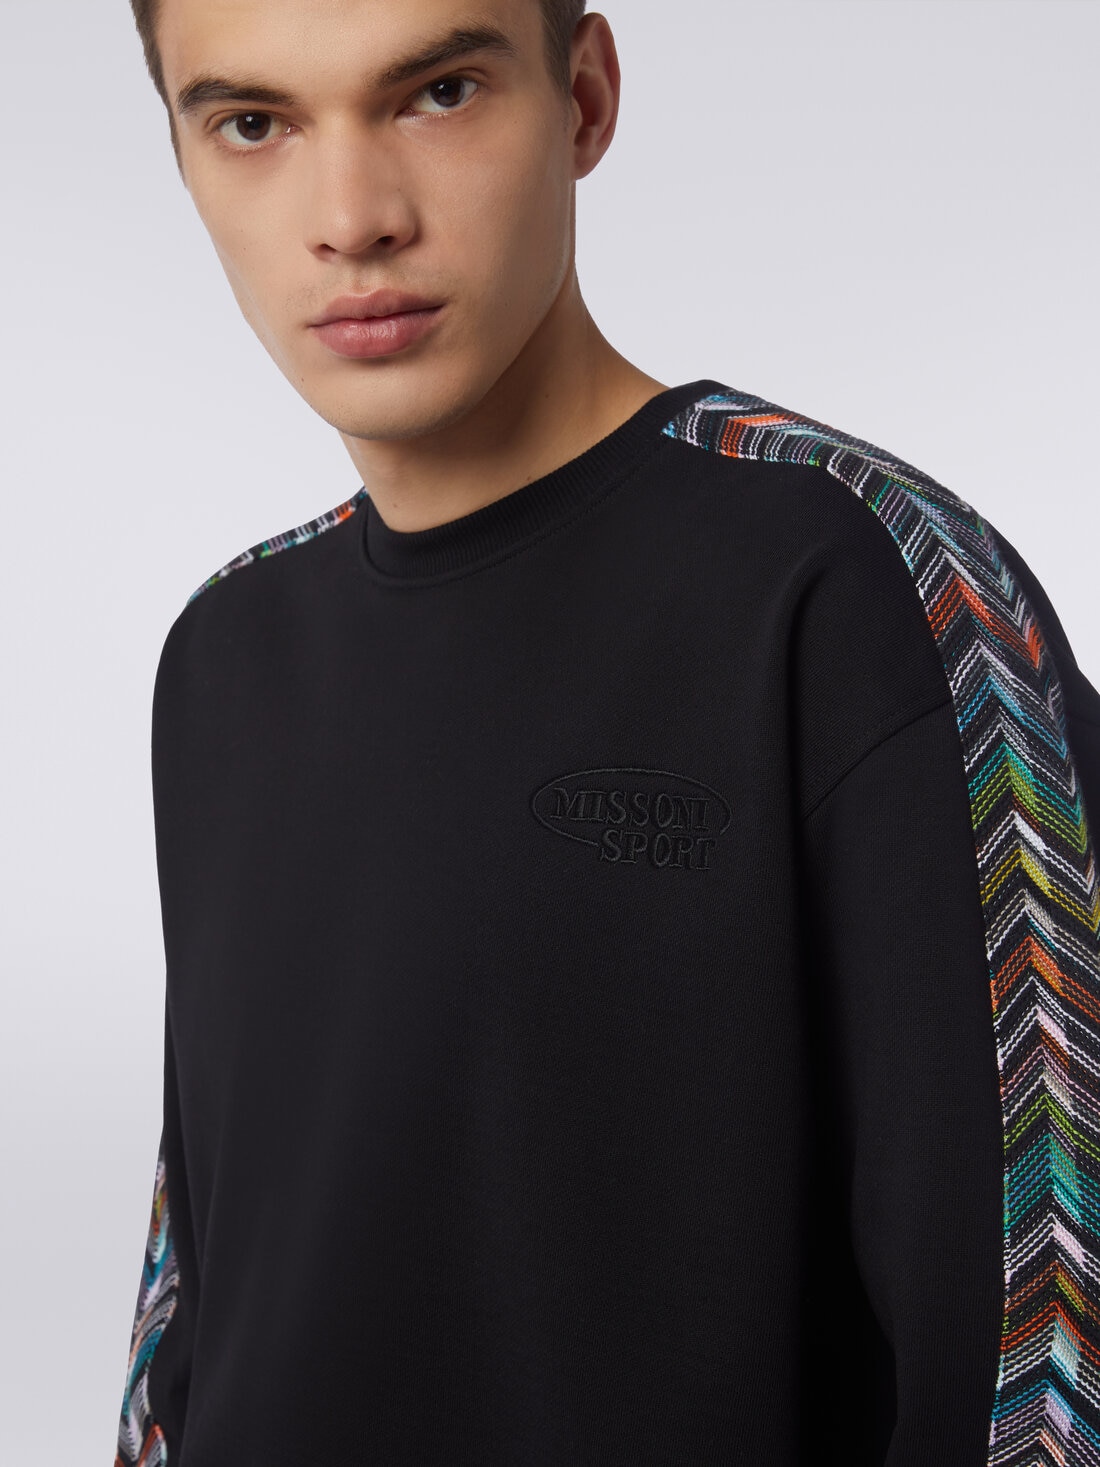 Crew-neck sweatshirt in cotton with zigzag knit details, Black    - TS24SW03BJ00JVS91J4 - 4